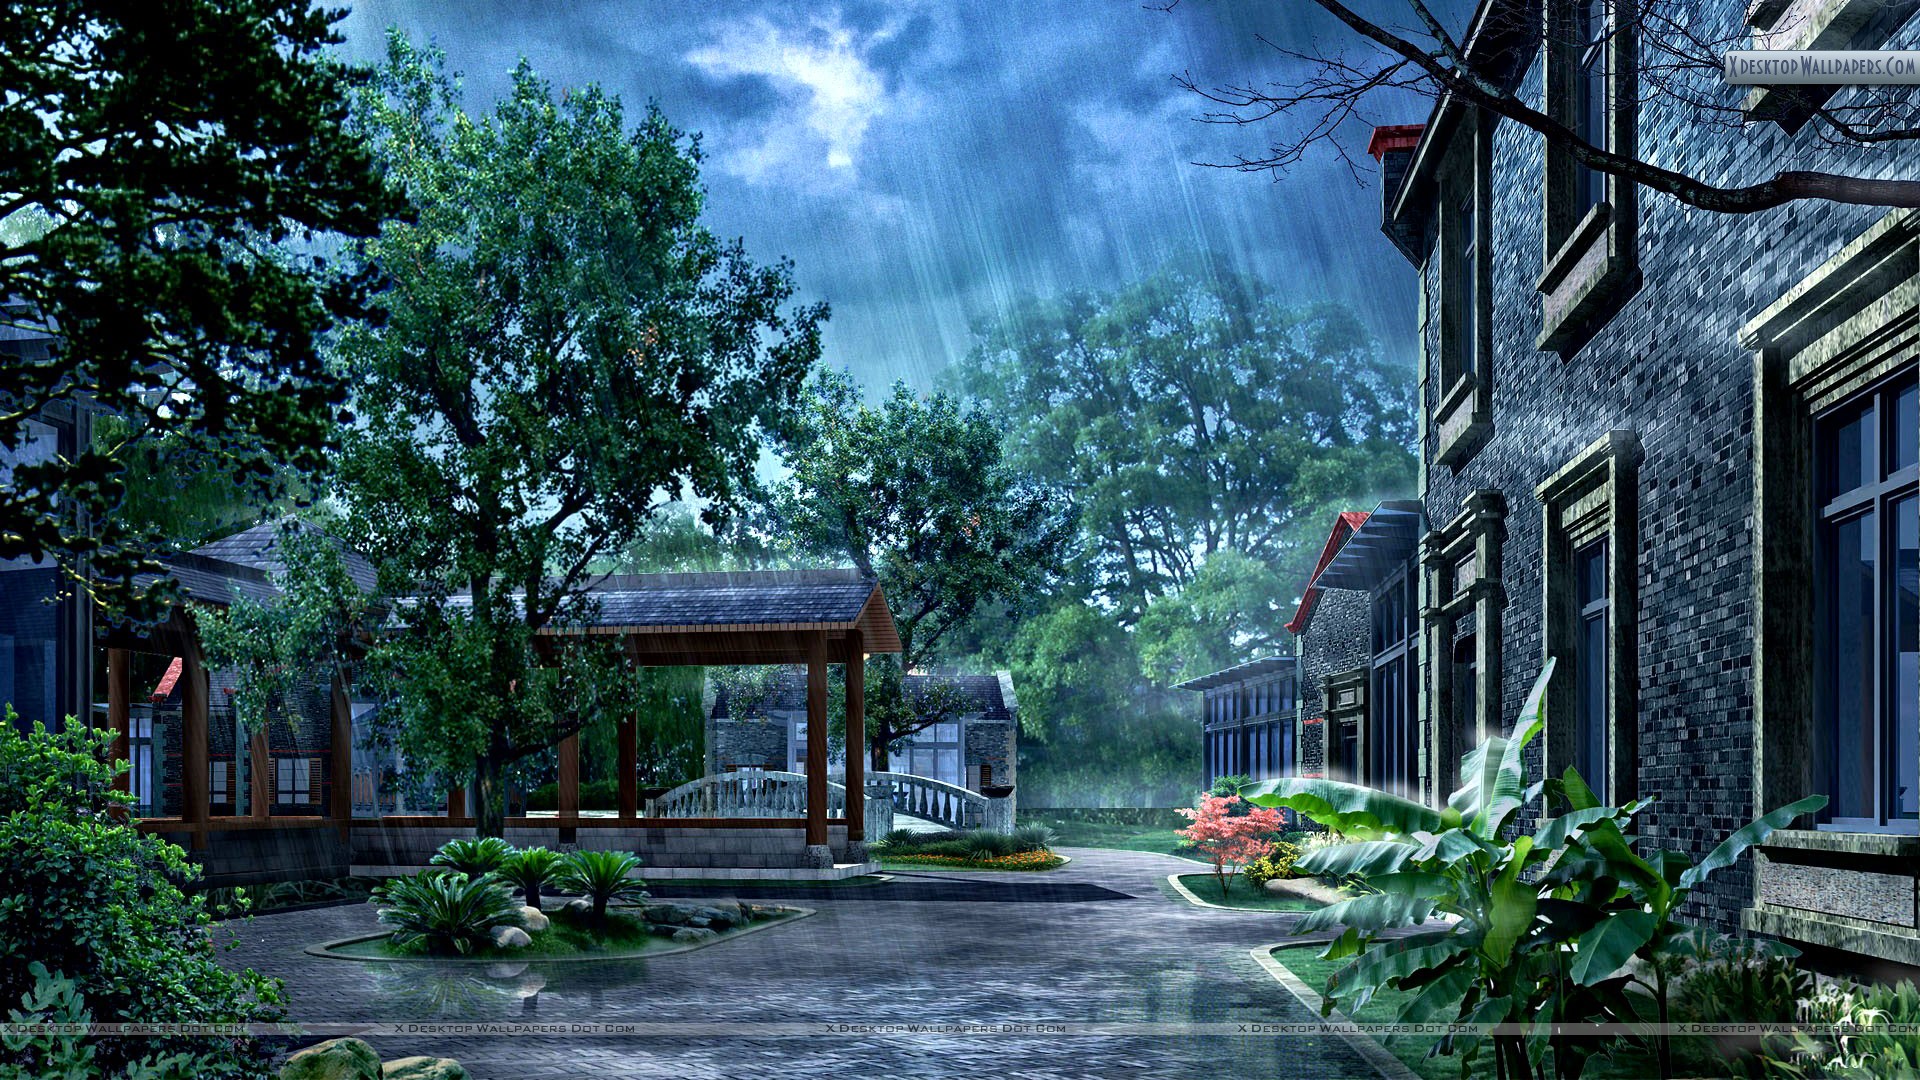 Rainy day  Other  Anime Background Wallpapers on Desktop Nexus Image  2266192